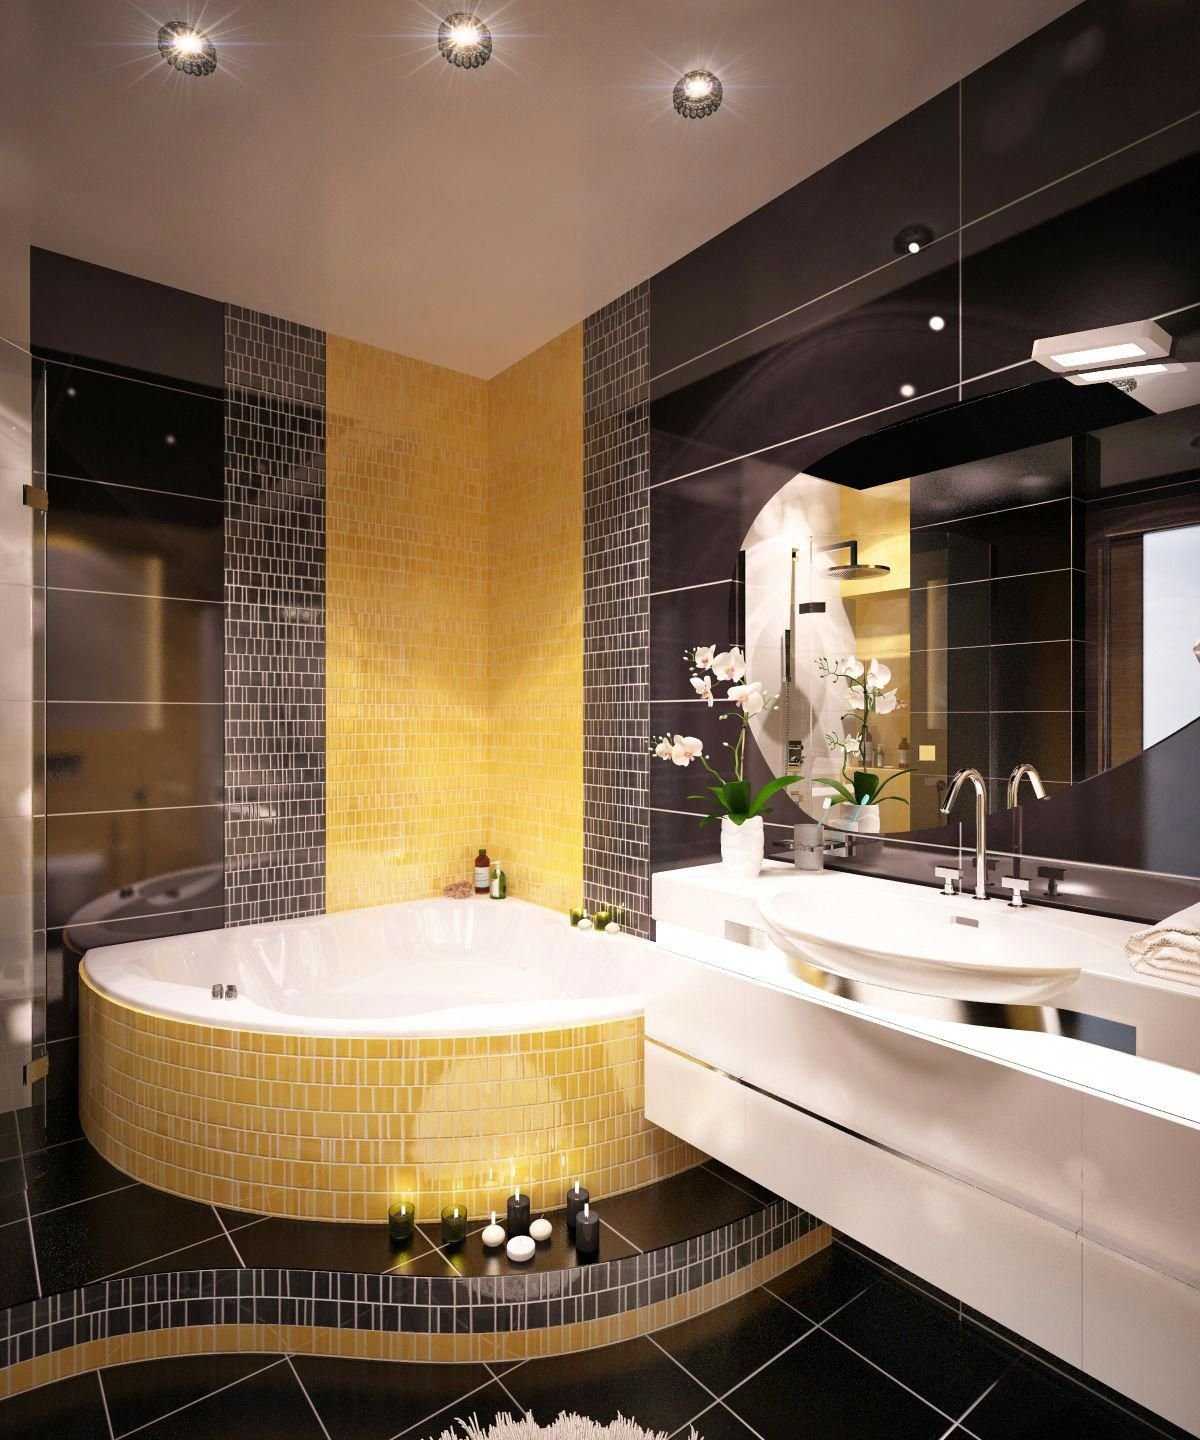 Ванная комната ру. Ванная комната. Ванная в современном стиле. Интерьер ванной. Современная ванная комната.